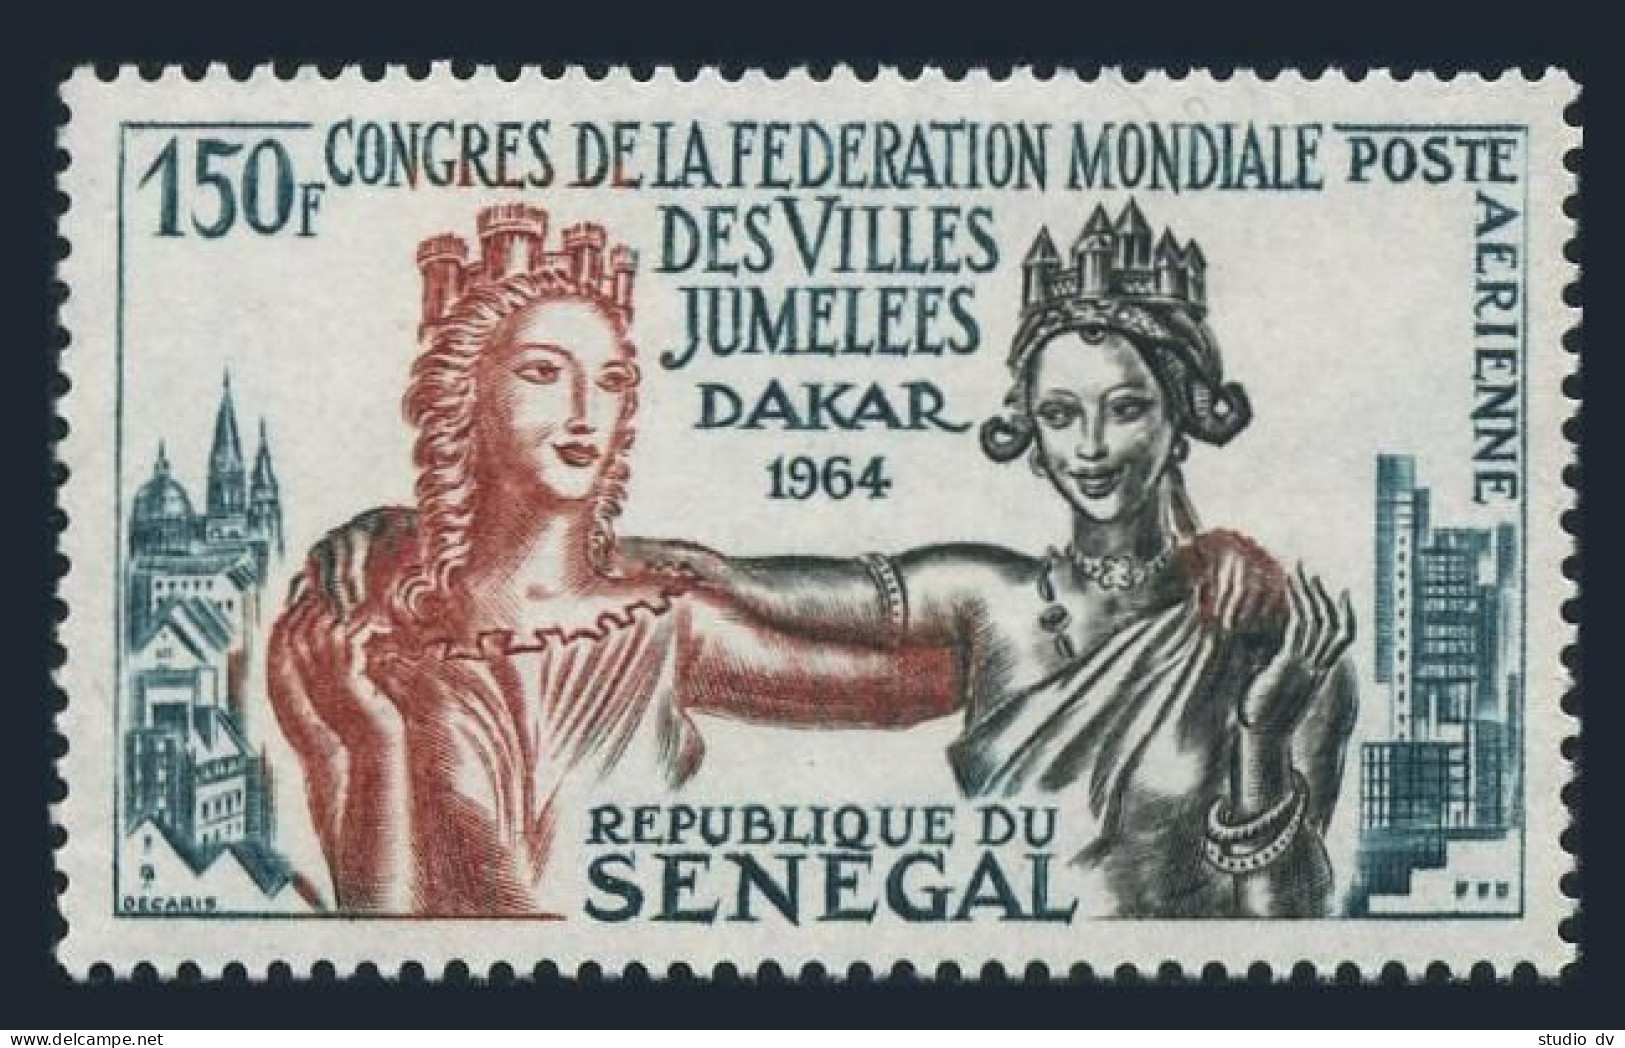 Senegal C35,MNH.Michel 280. Federation Of Twin Cities, 1964. - Senegal (1960-...)